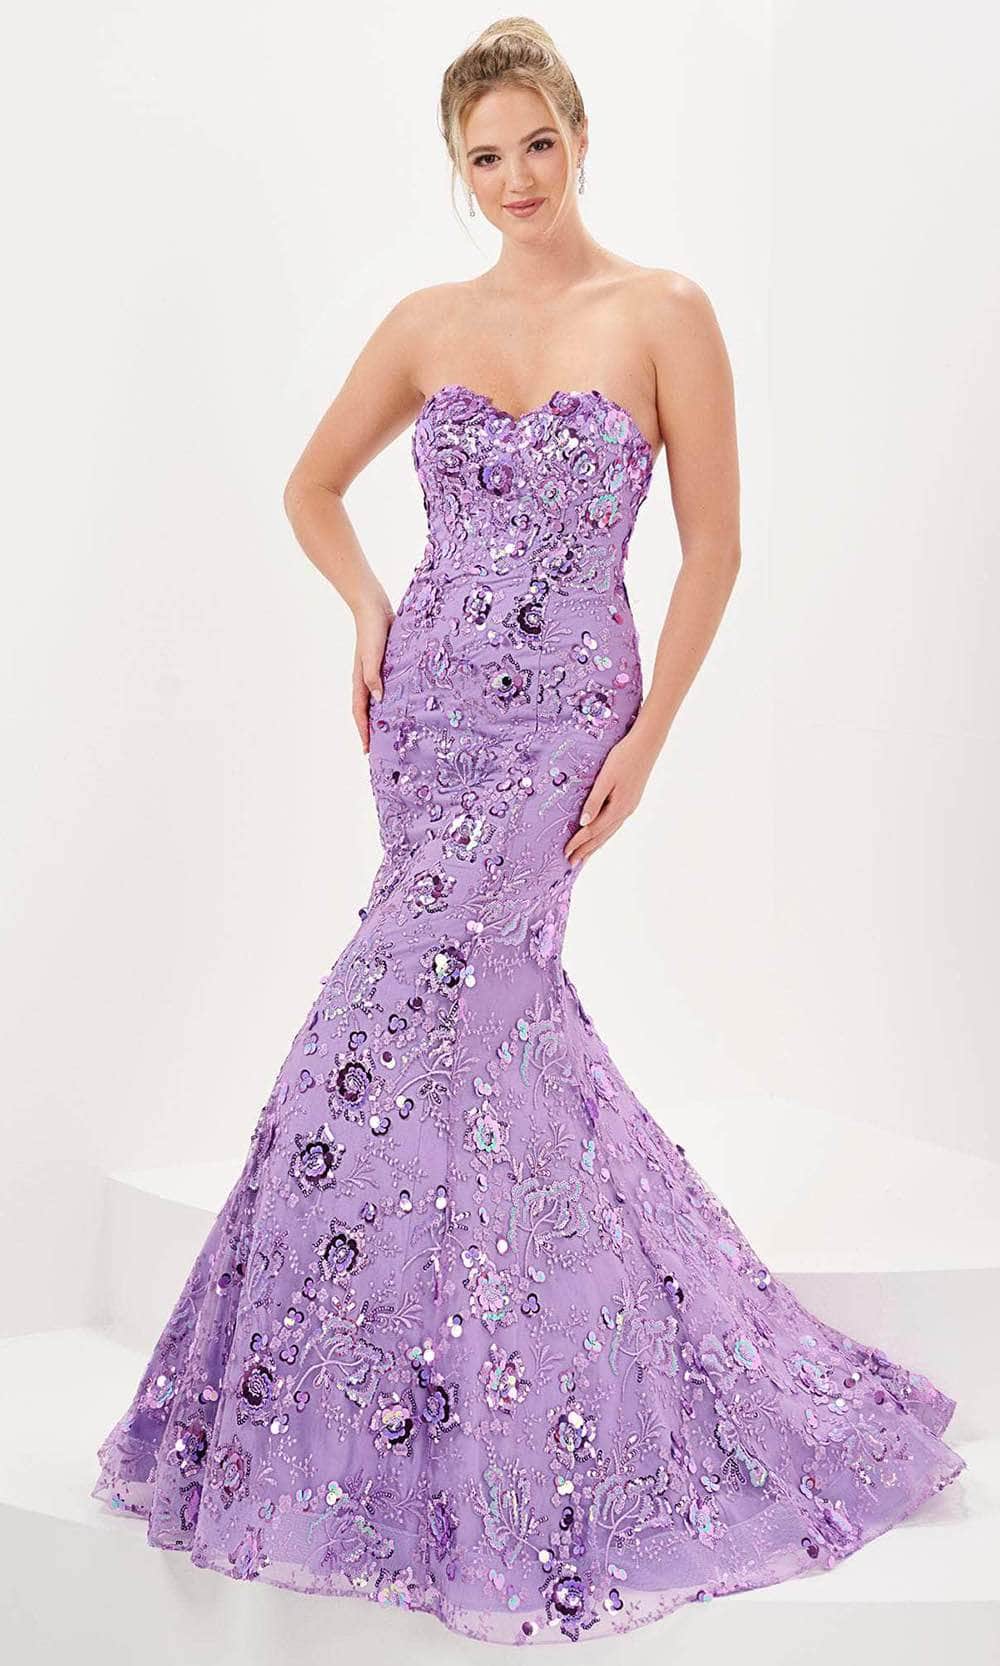 Tiffany Designs 16052 - Embellished Mermaid Evening Gown
